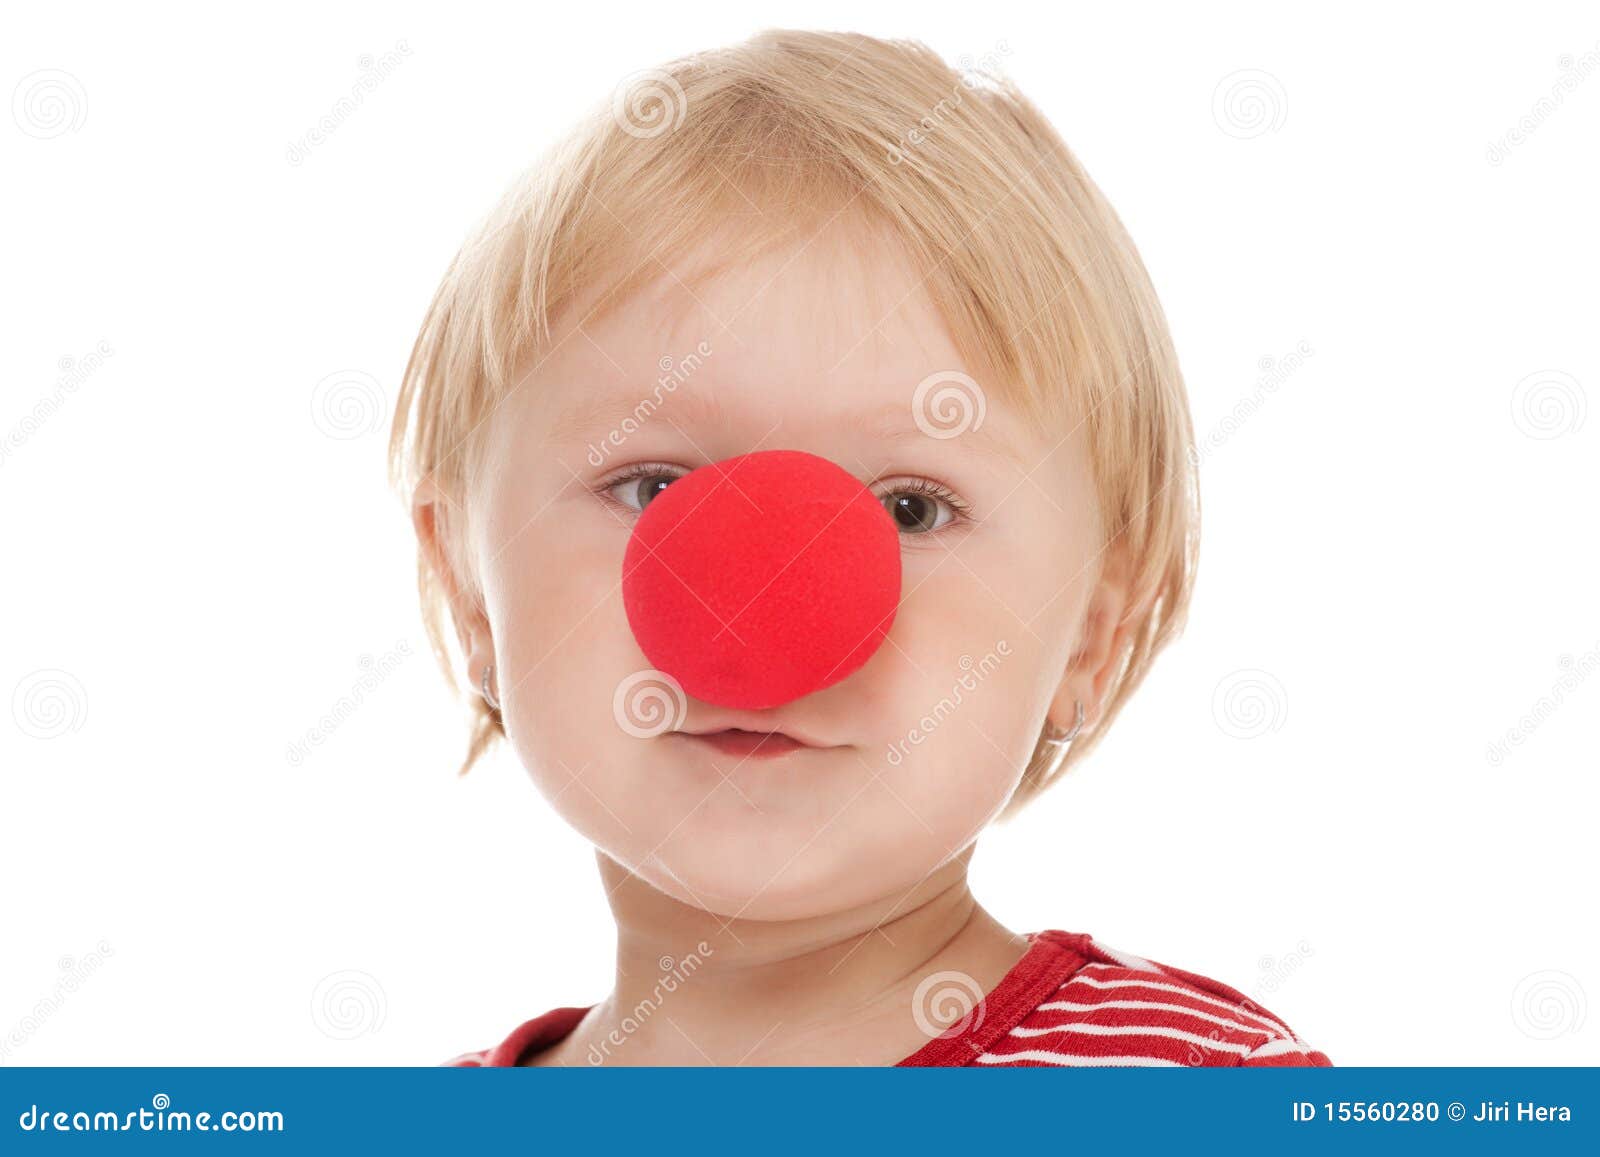 Игра красный нос. Нос клоуна. Красный нос клоуна. Детский нос клоун. Большой клоунский нос.